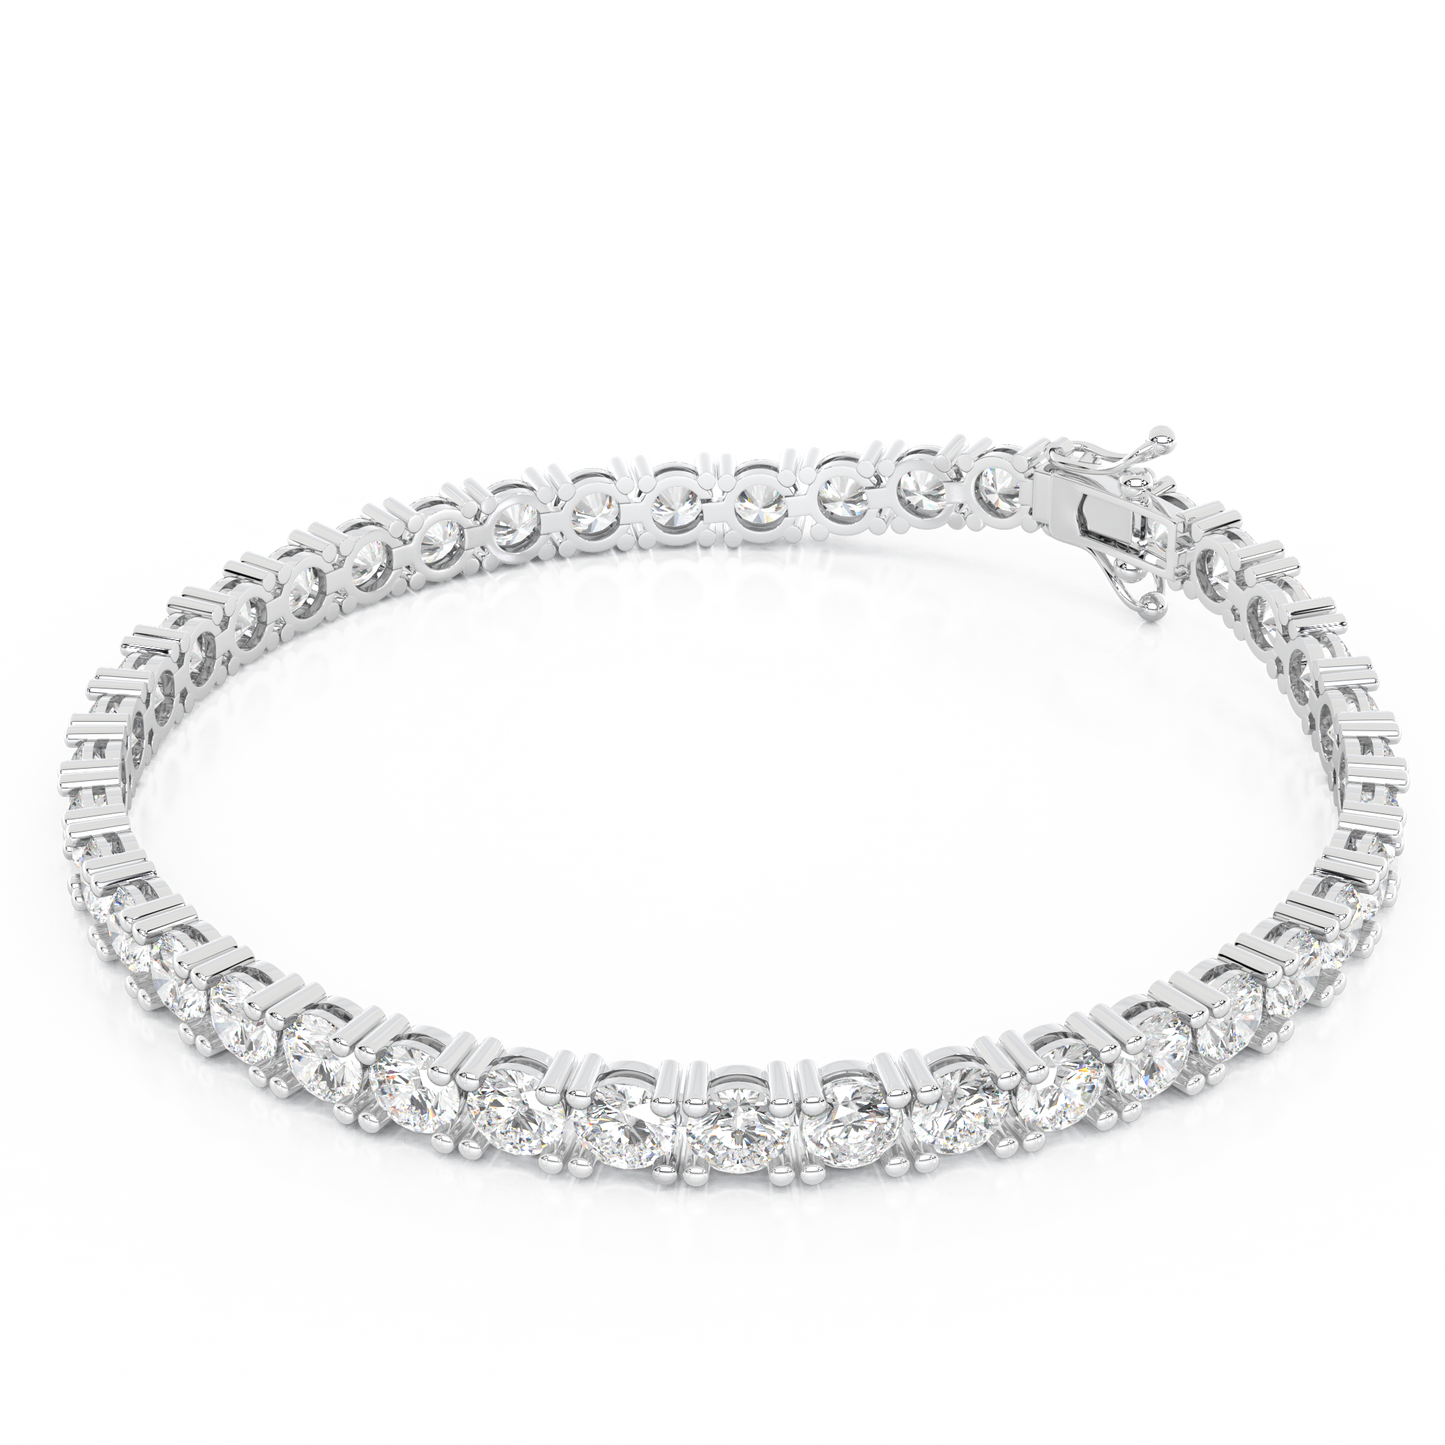 3.00cts+ 4-Prong Lab Grown Diamond Bracelet <Affordable>